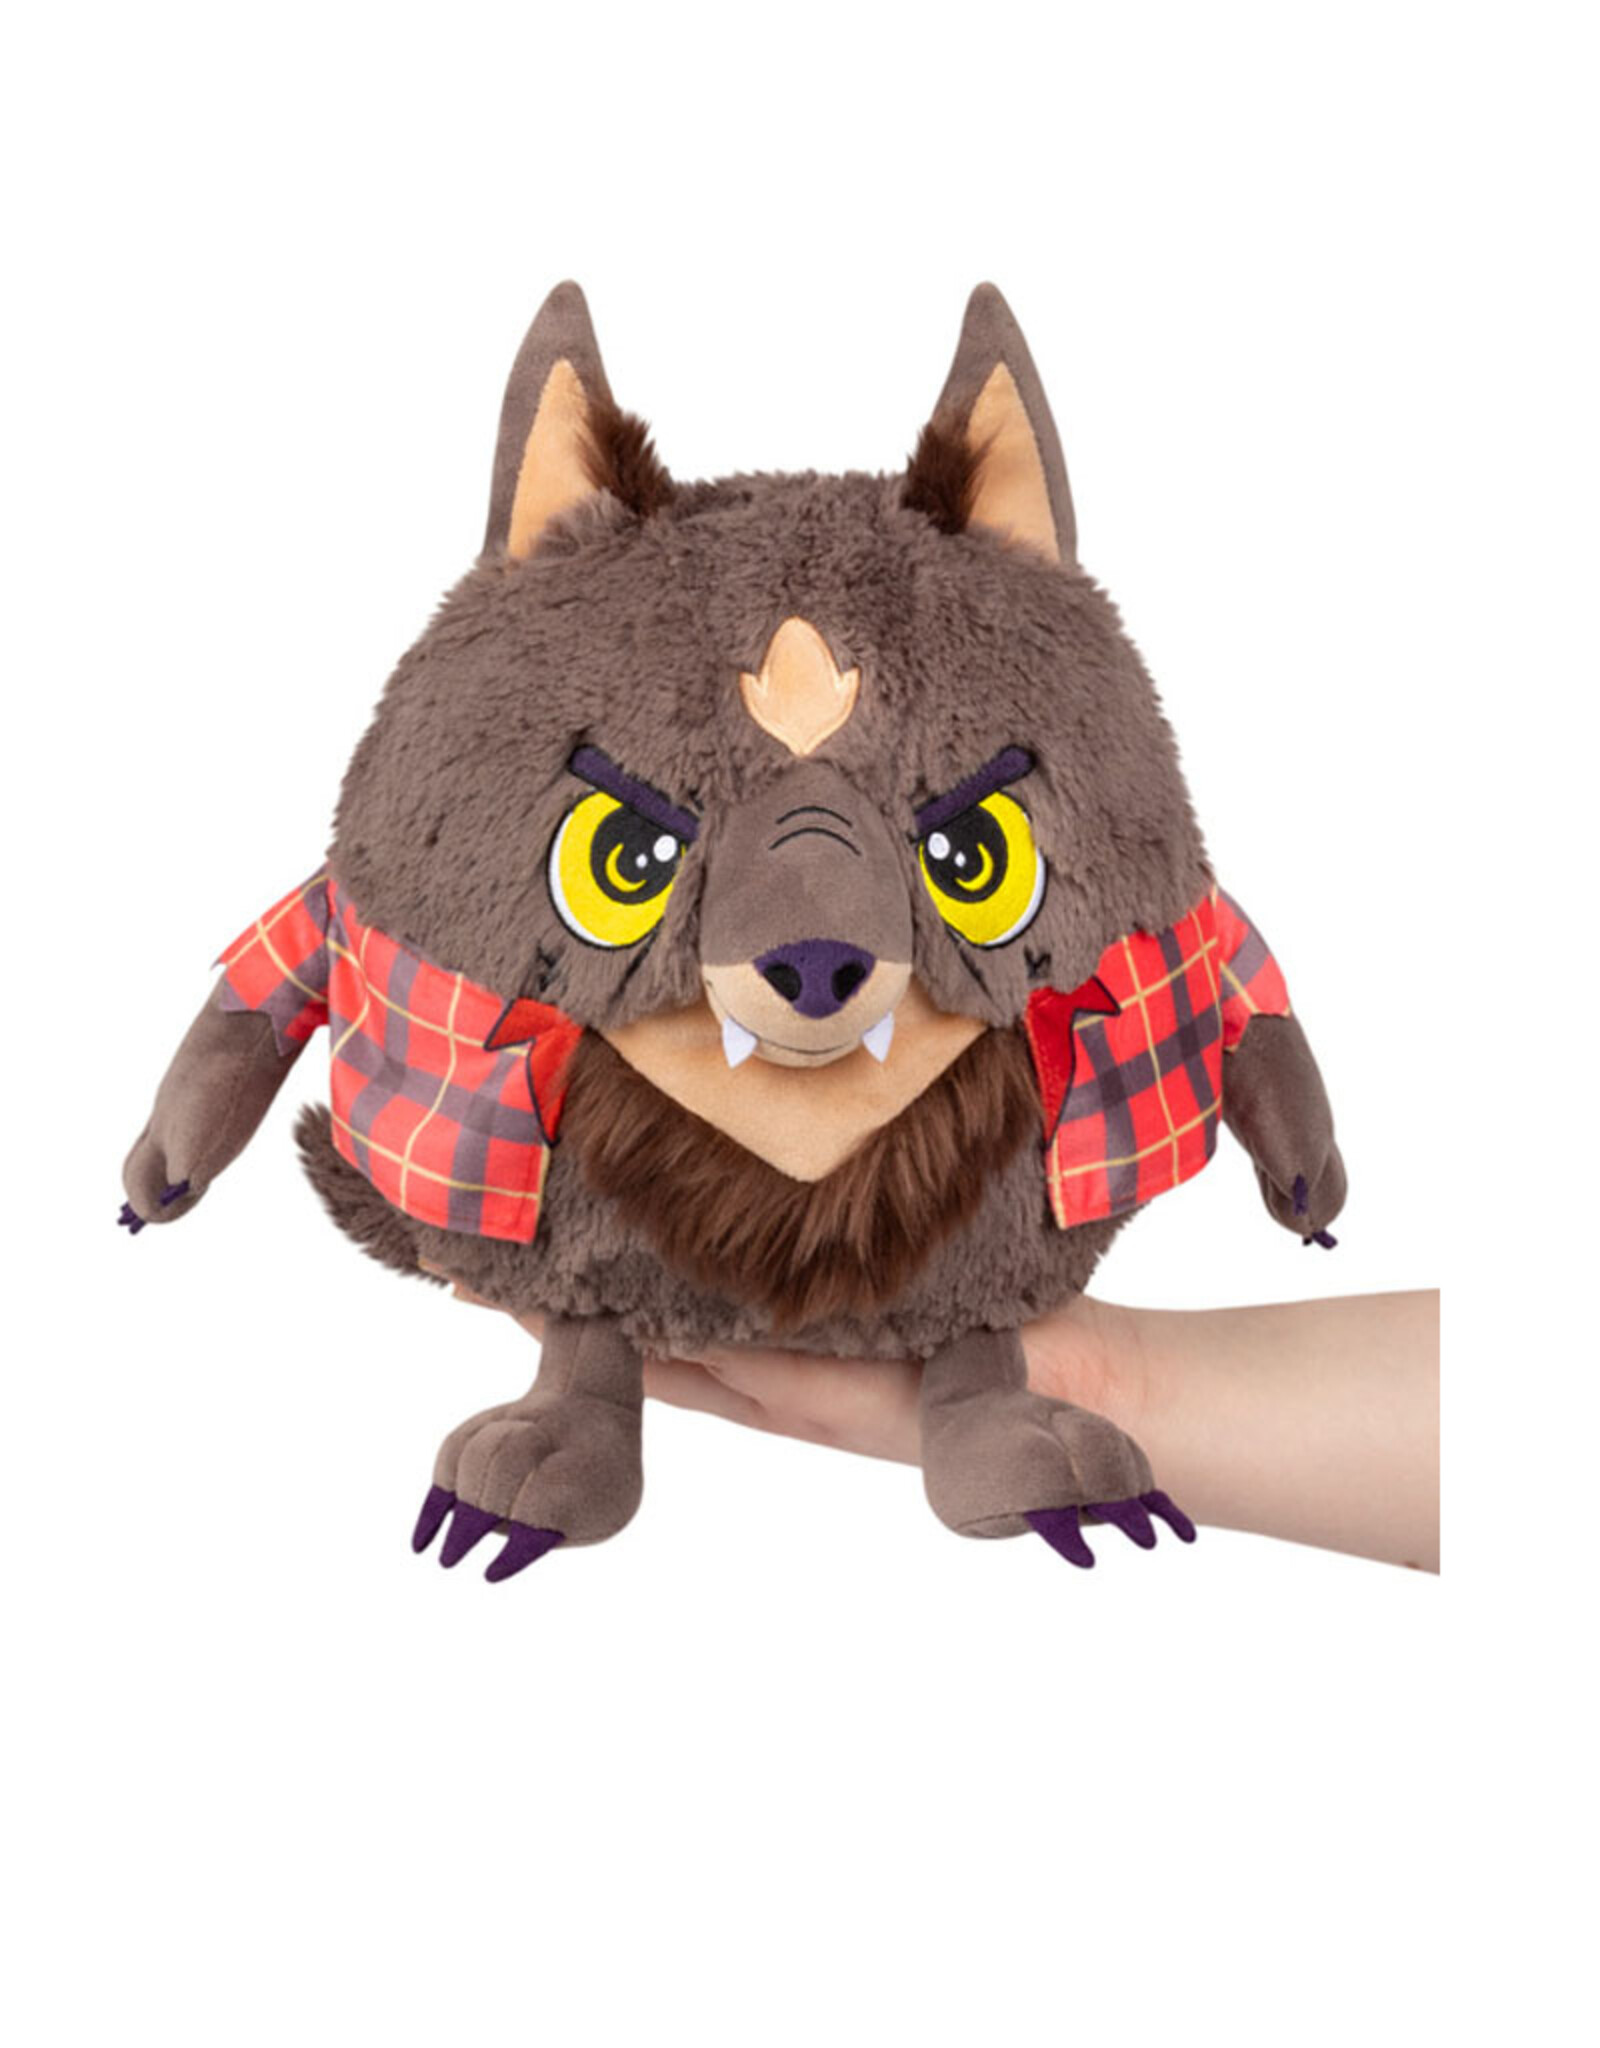 Squishable Squishables - Mini Werewolf